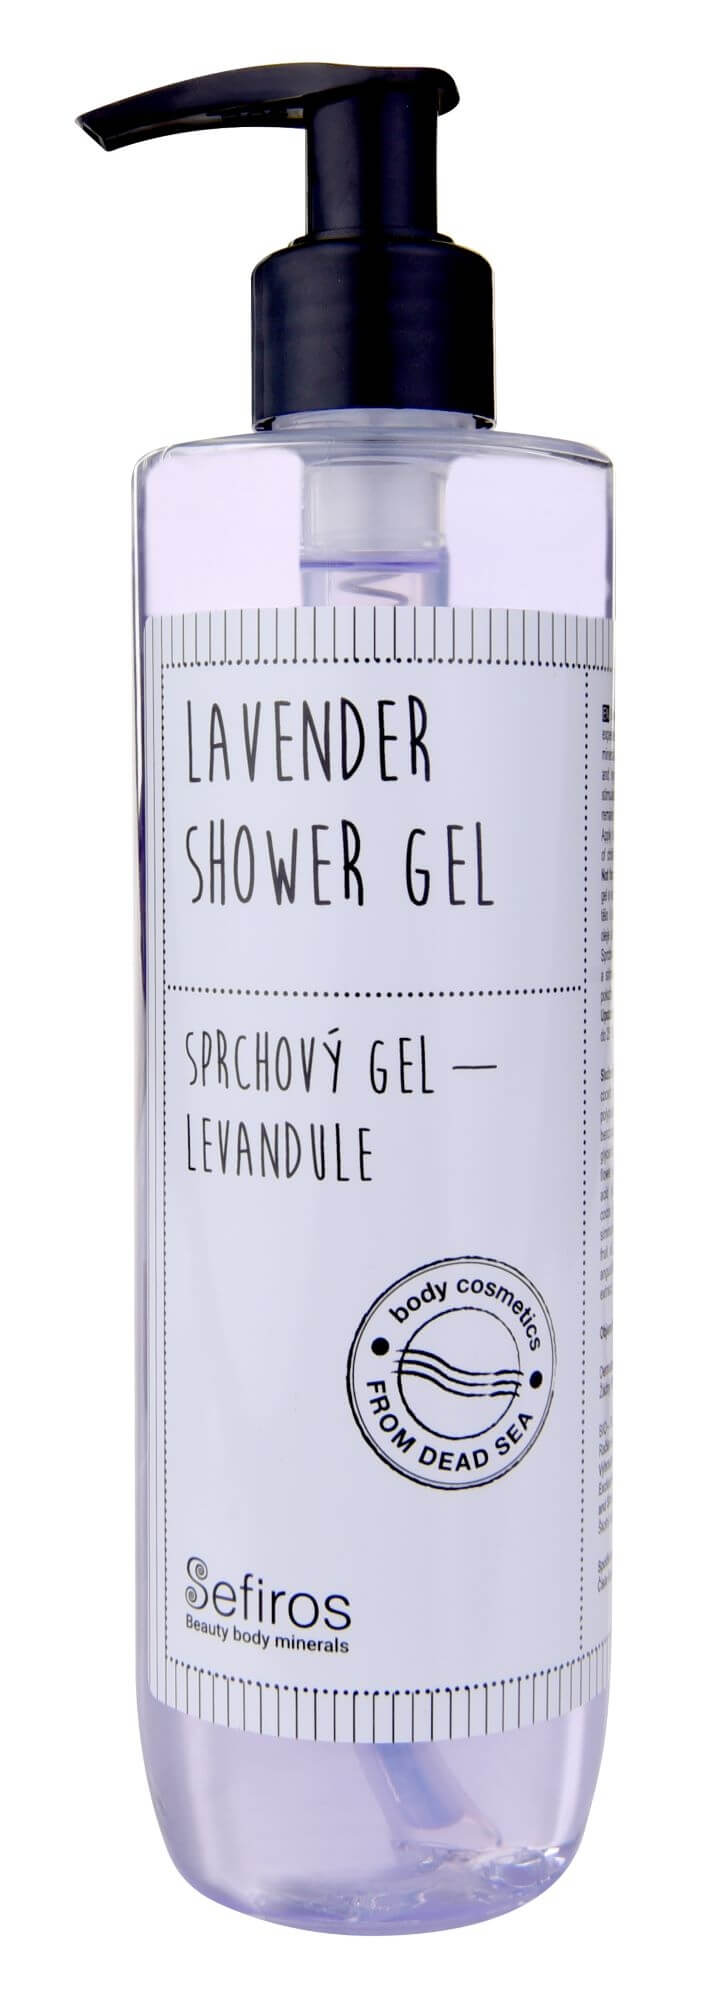 Sefiross Sprchový gel Levandule (Lavender Shower Gel) 300 ml